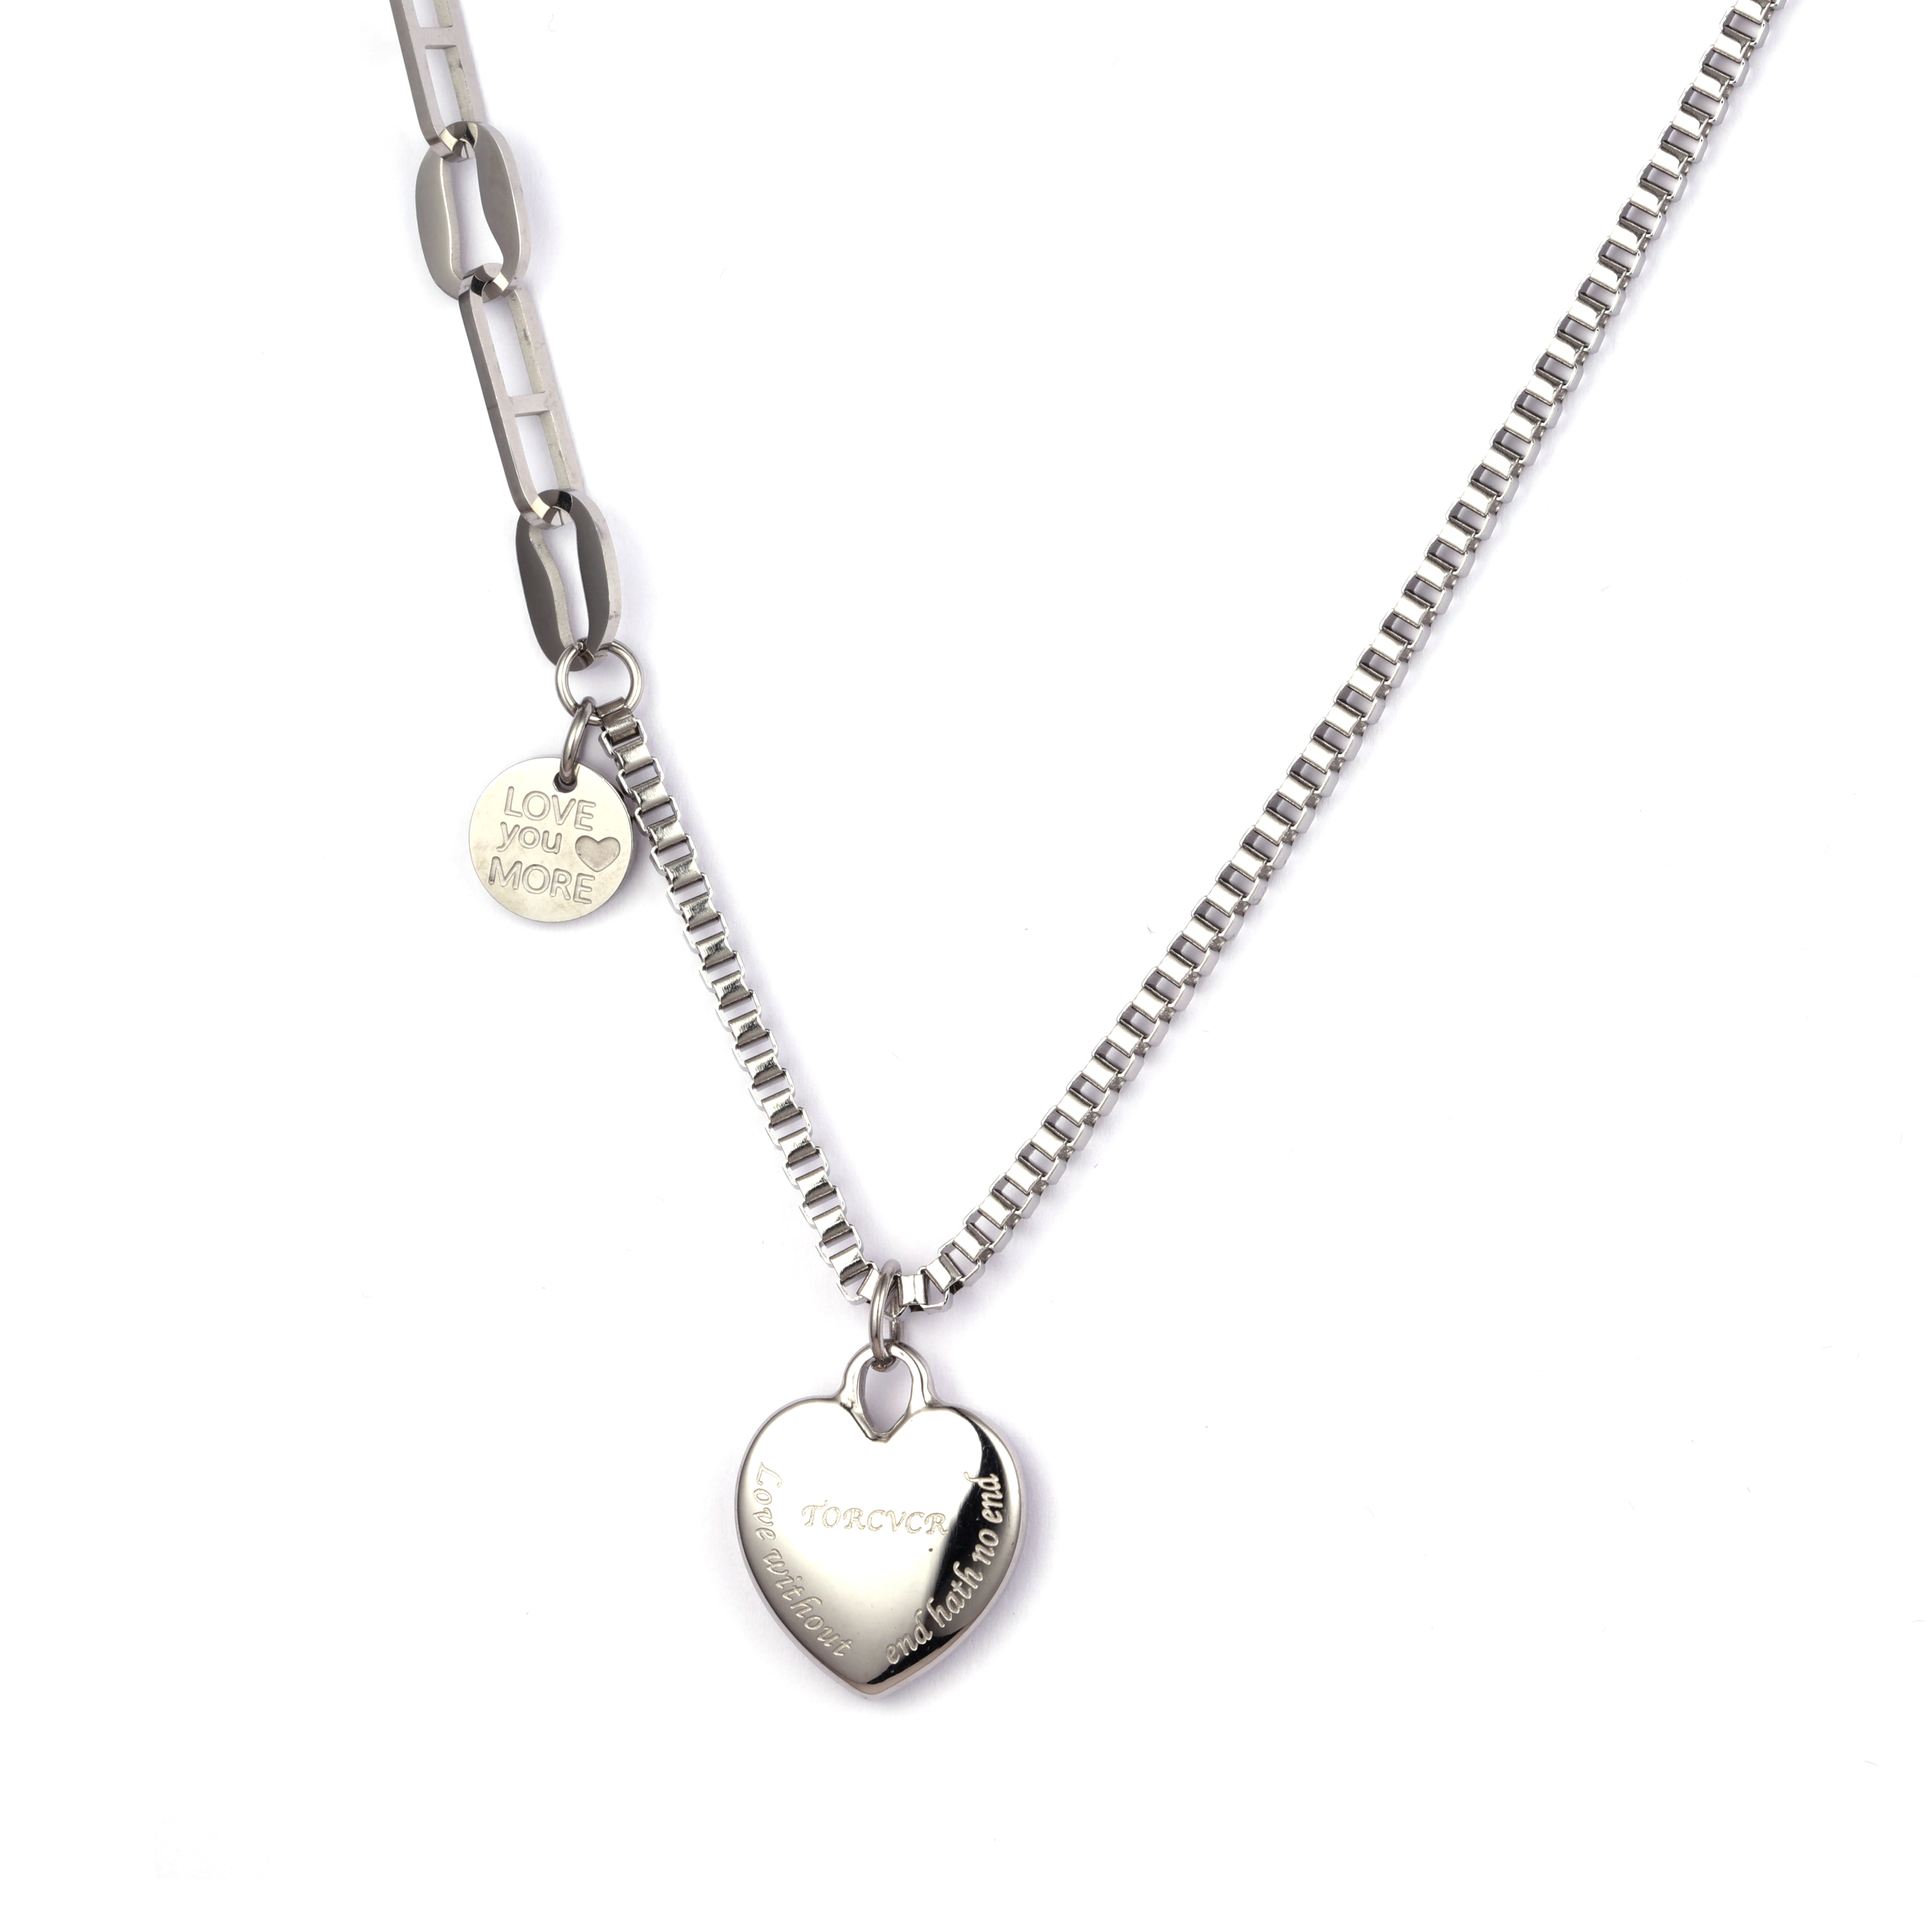 Peach heart pendant necklace